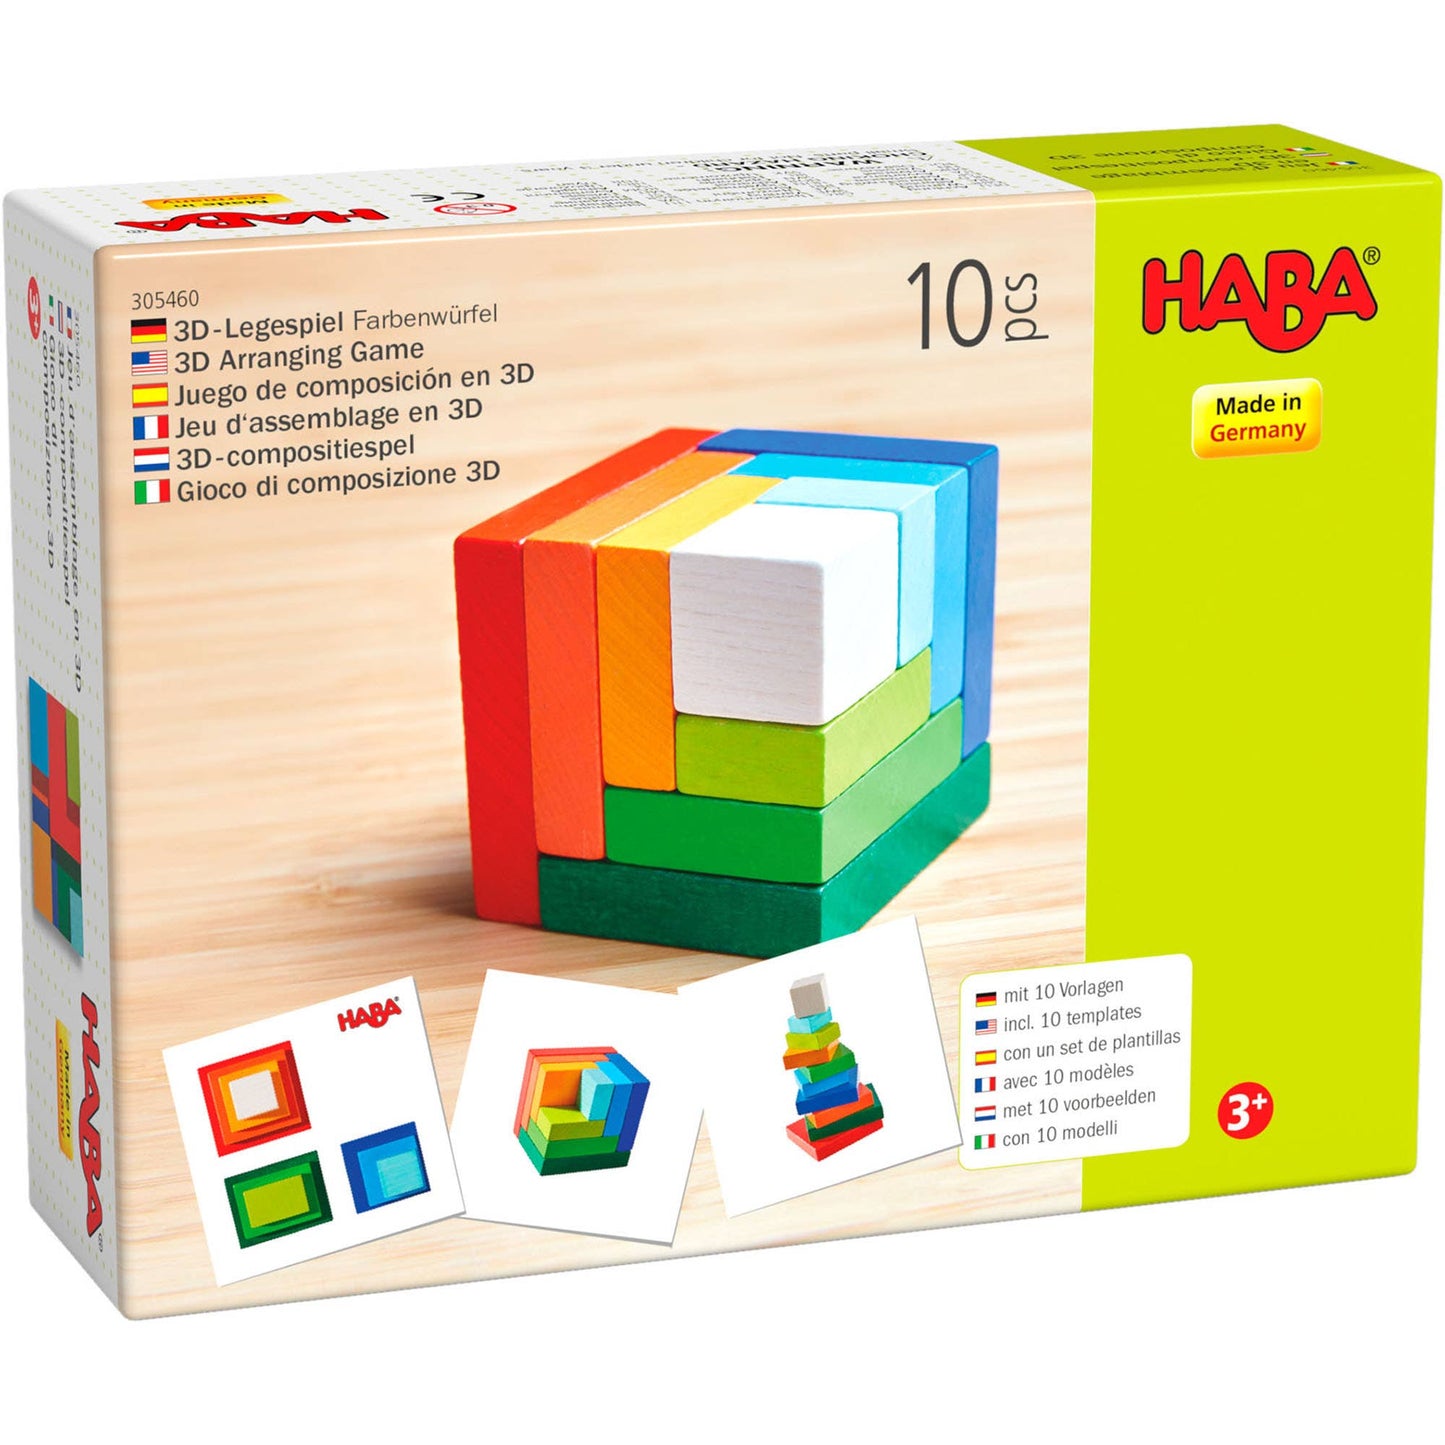 HABA USA - 3D Arranging Game Rainbow Cube